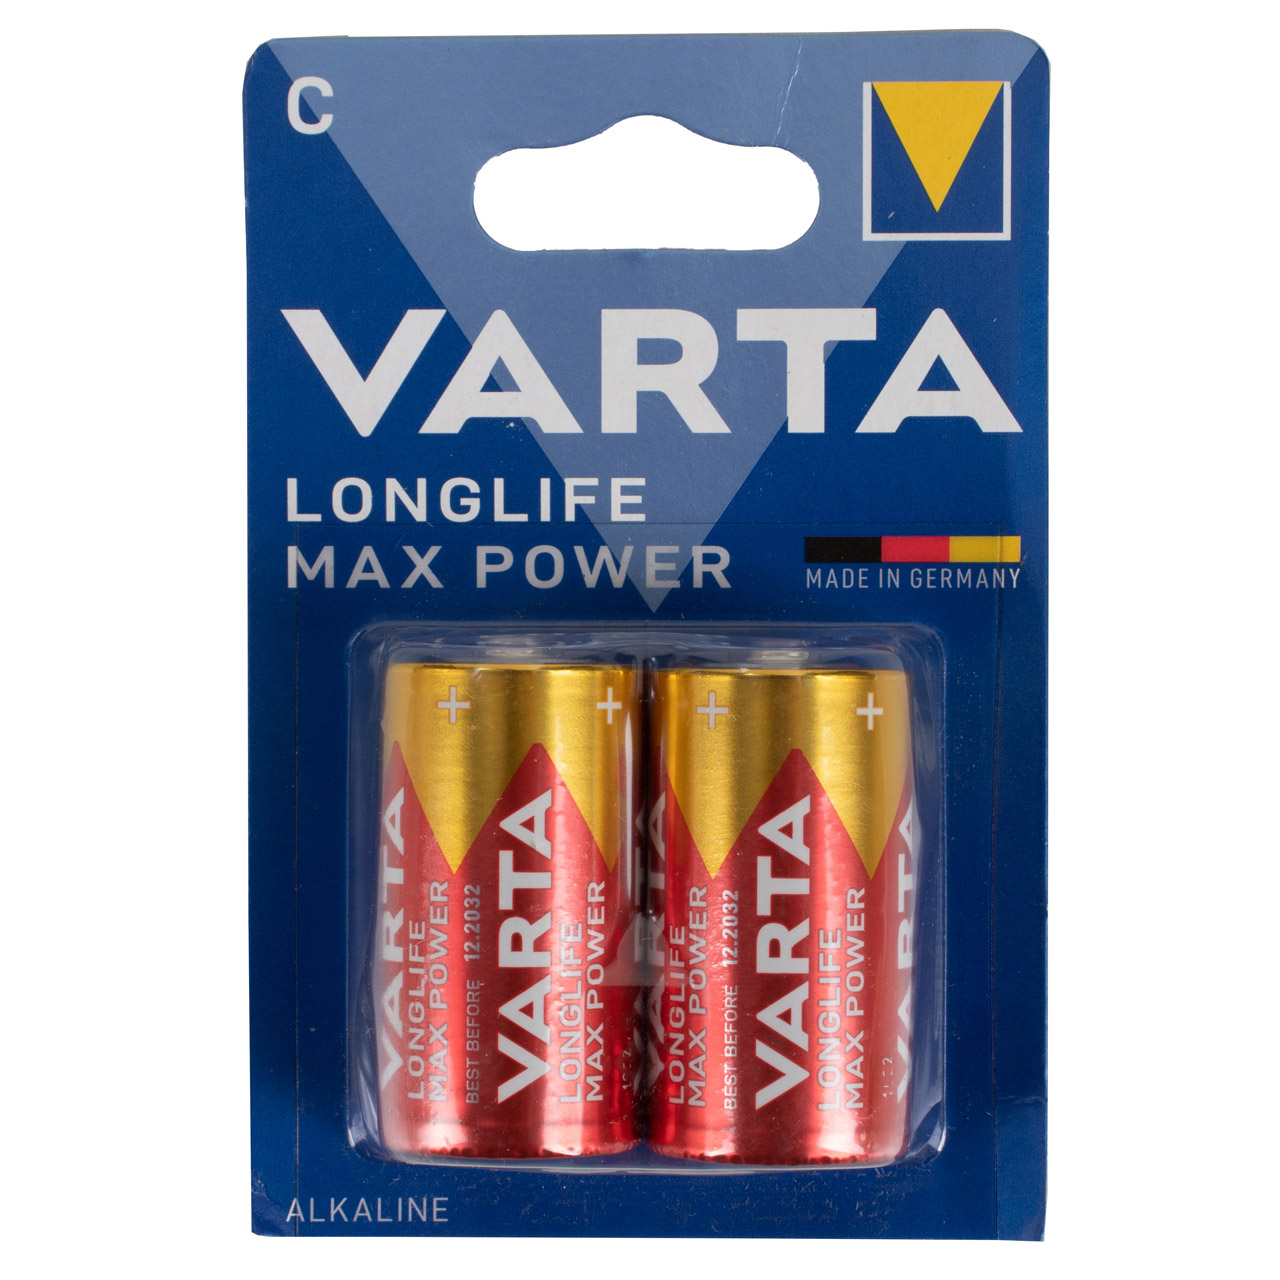 VARTA Pile alcaline LONGLIFE Power, Baby (C/LR14)